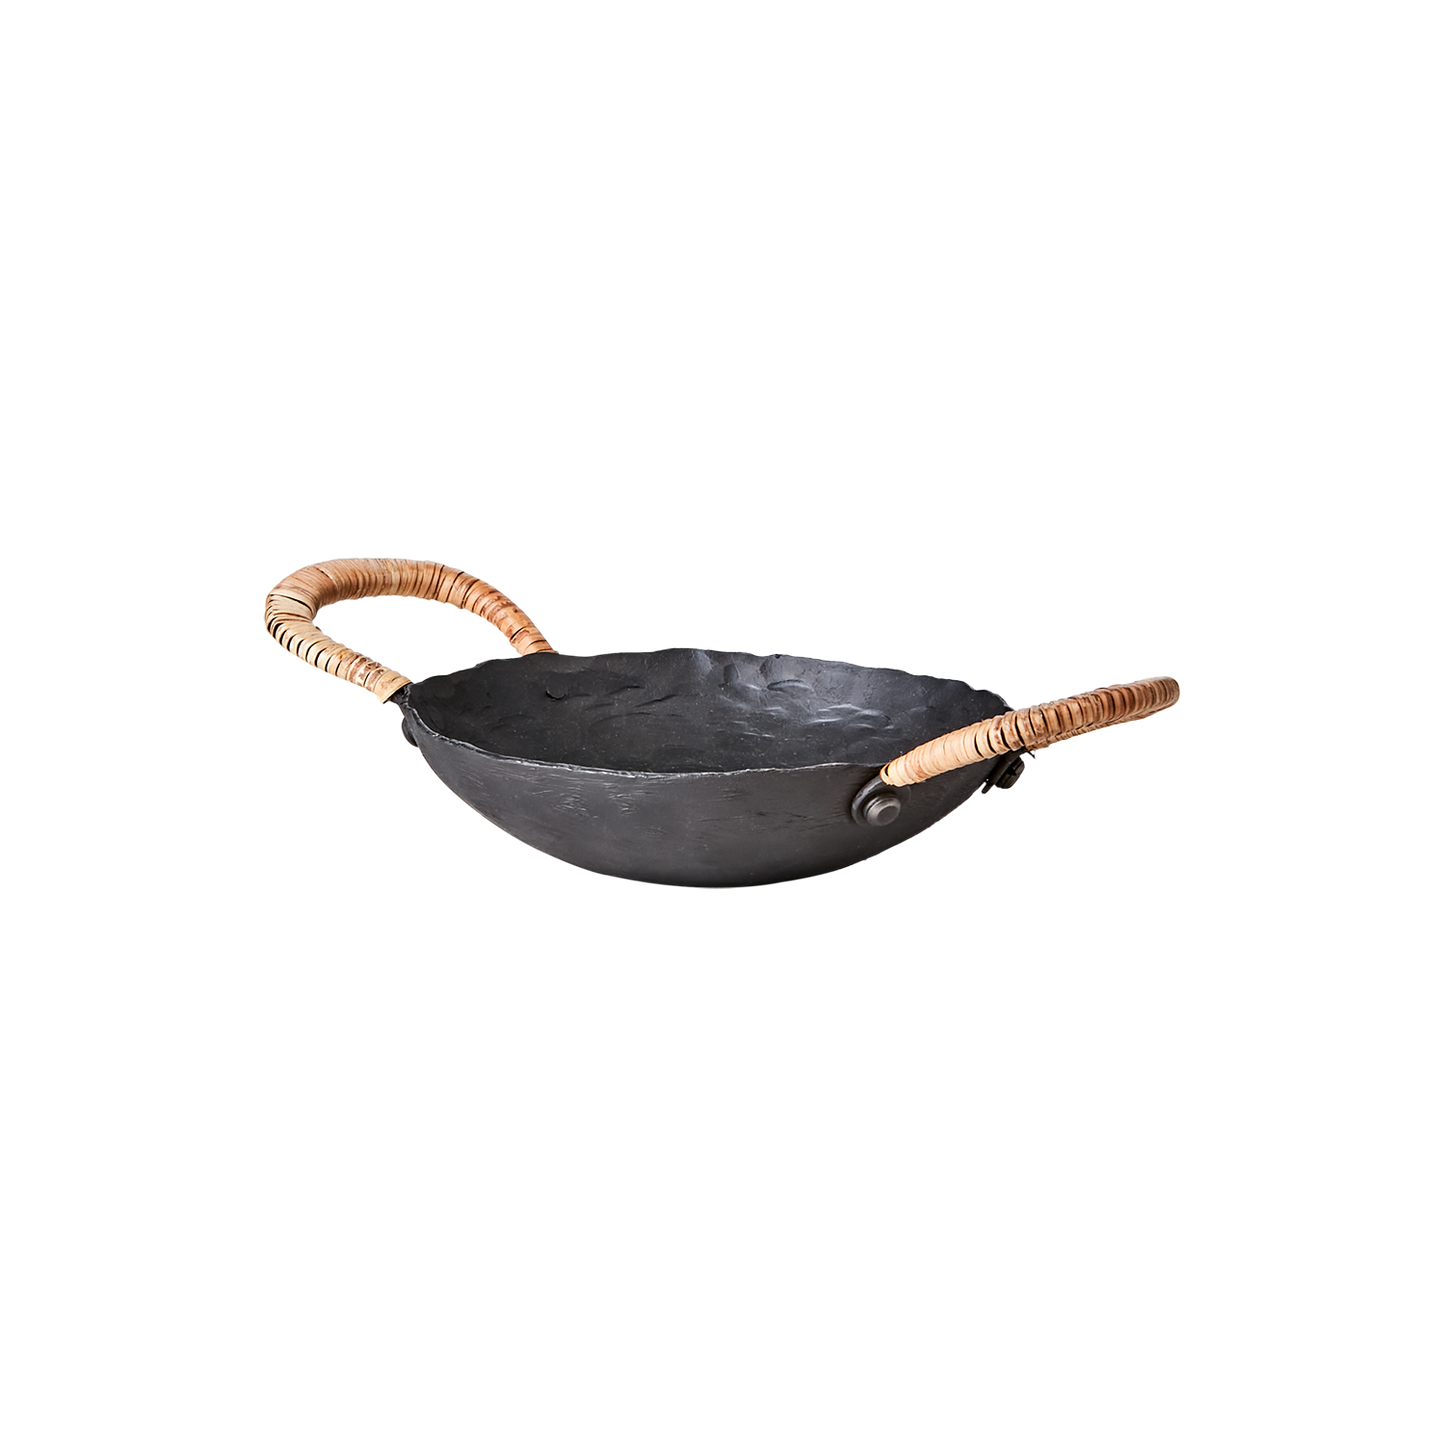 Iron dish with rattan handles